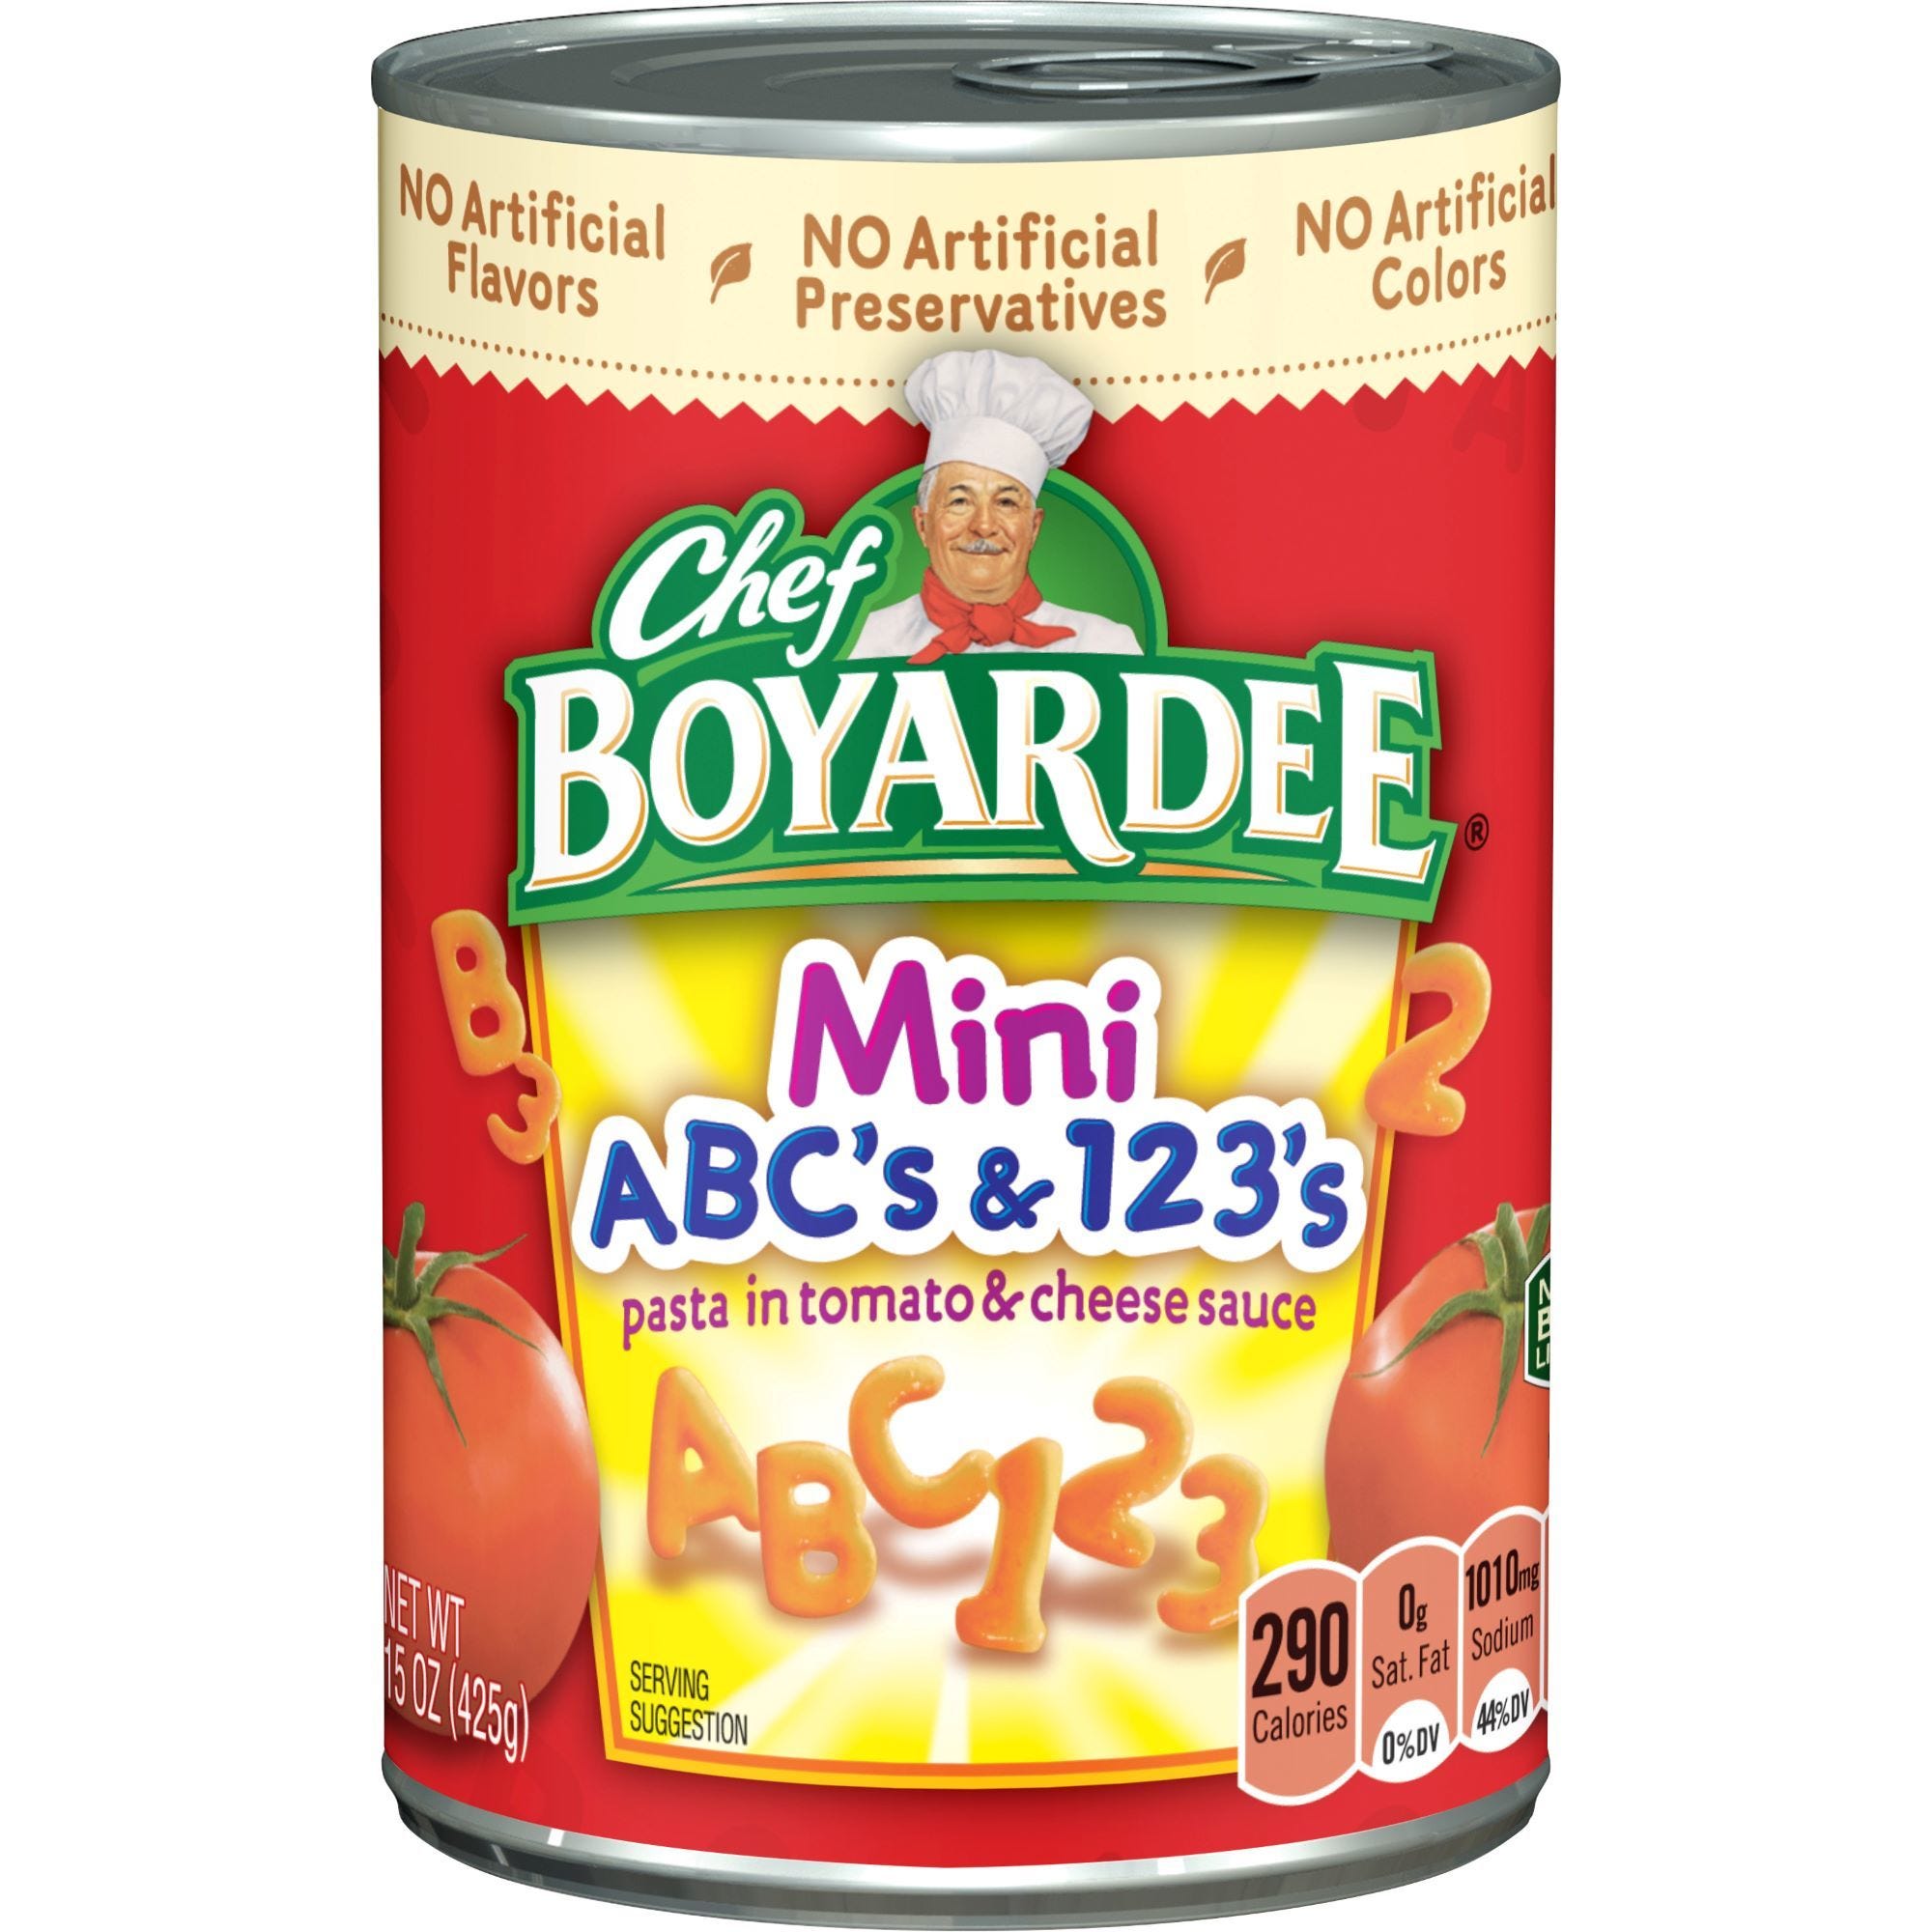 Chef Boyardee Mini ABC's & 123's with Meatballs - 15 oz